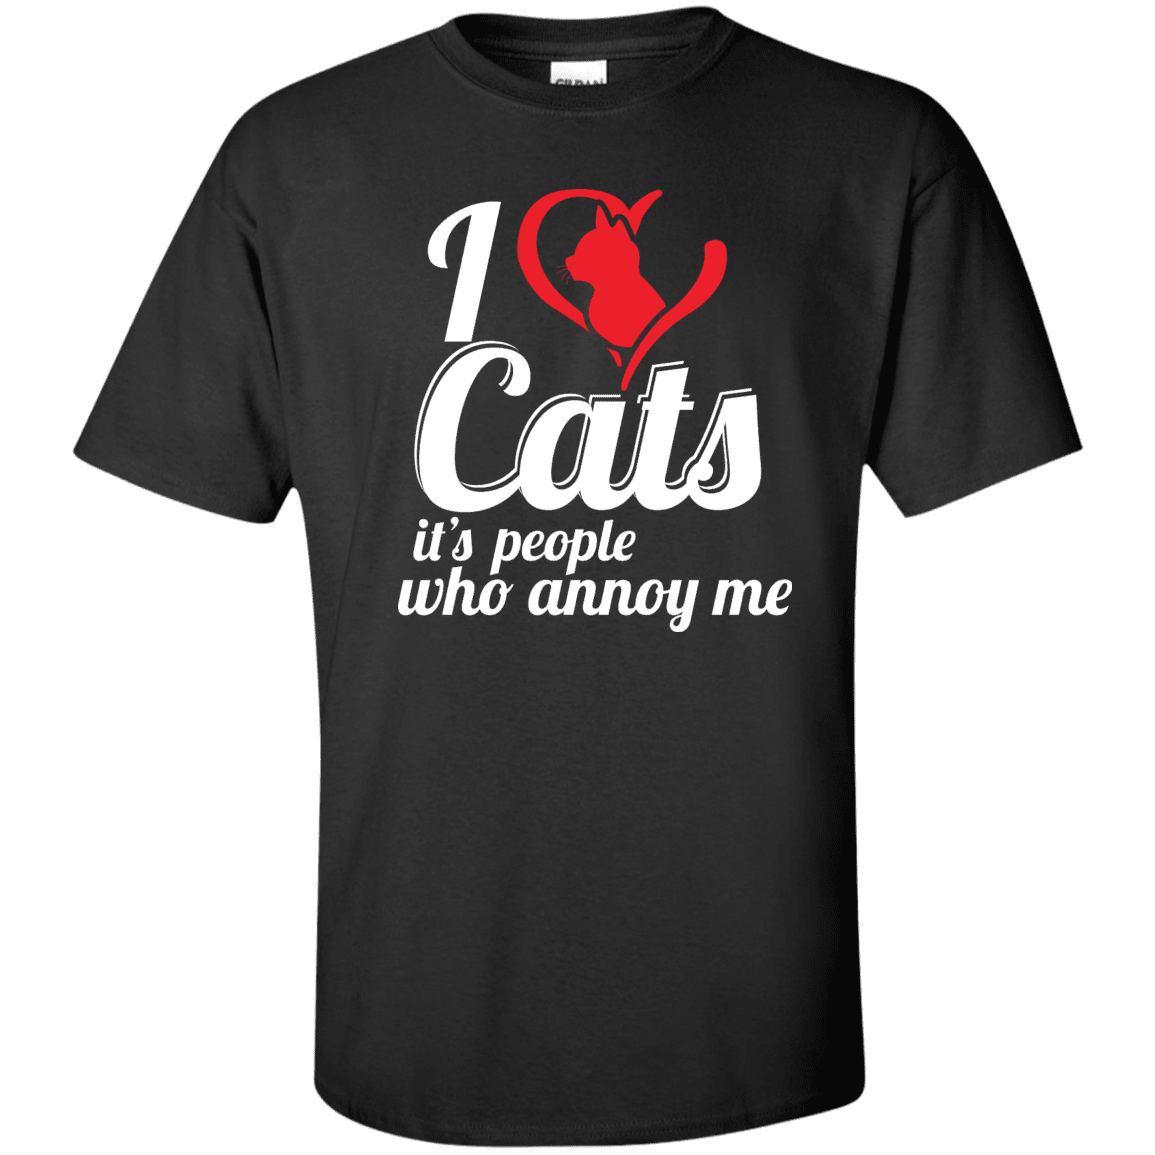 I Love Cats - T Shirt.